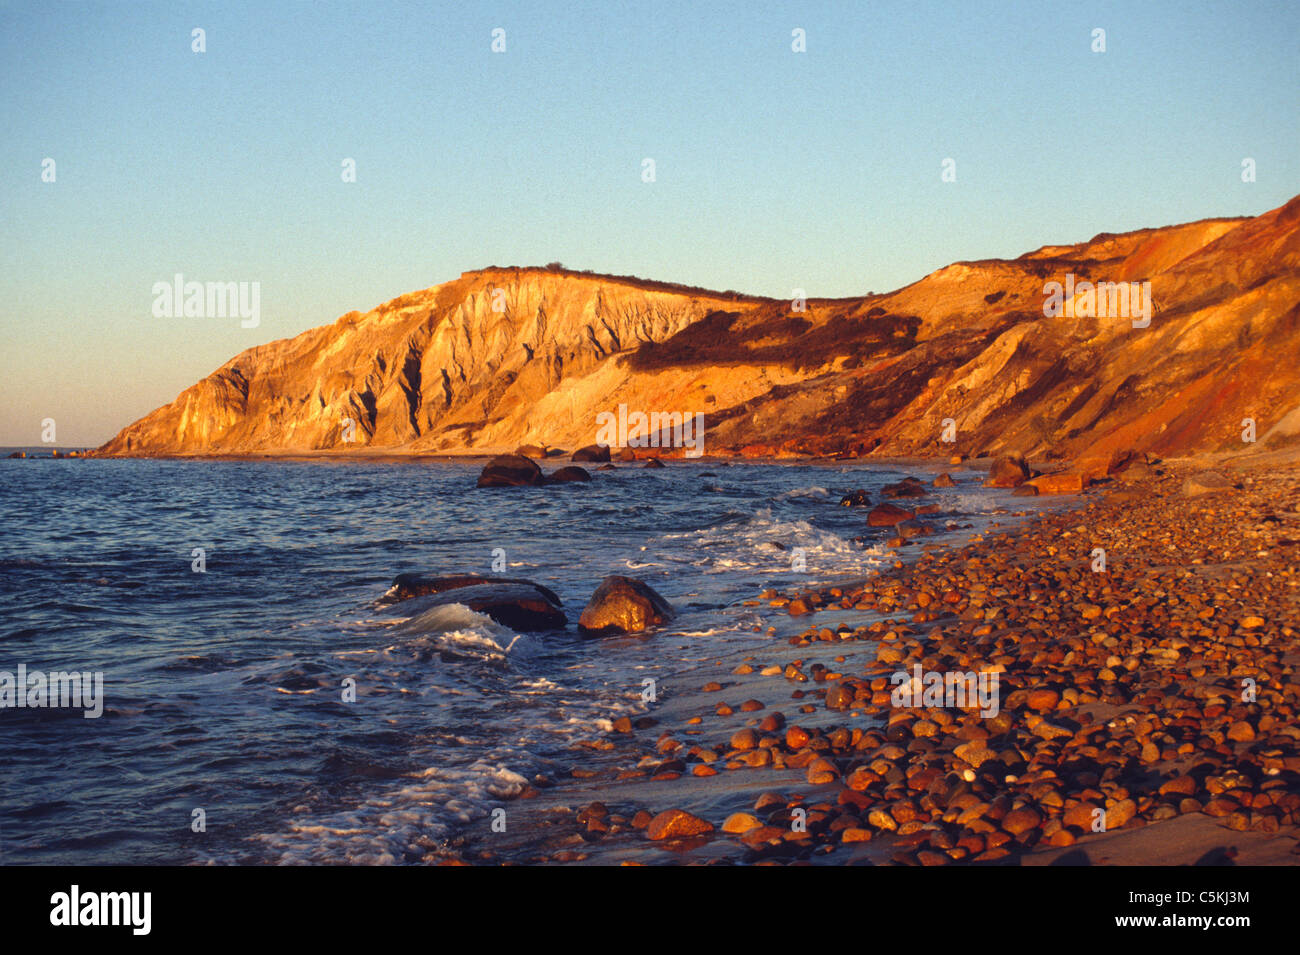 playa, piedras, mar, montana costal, orilla del mar, olas del mar, rocas, Michael Vitti Stock Photo